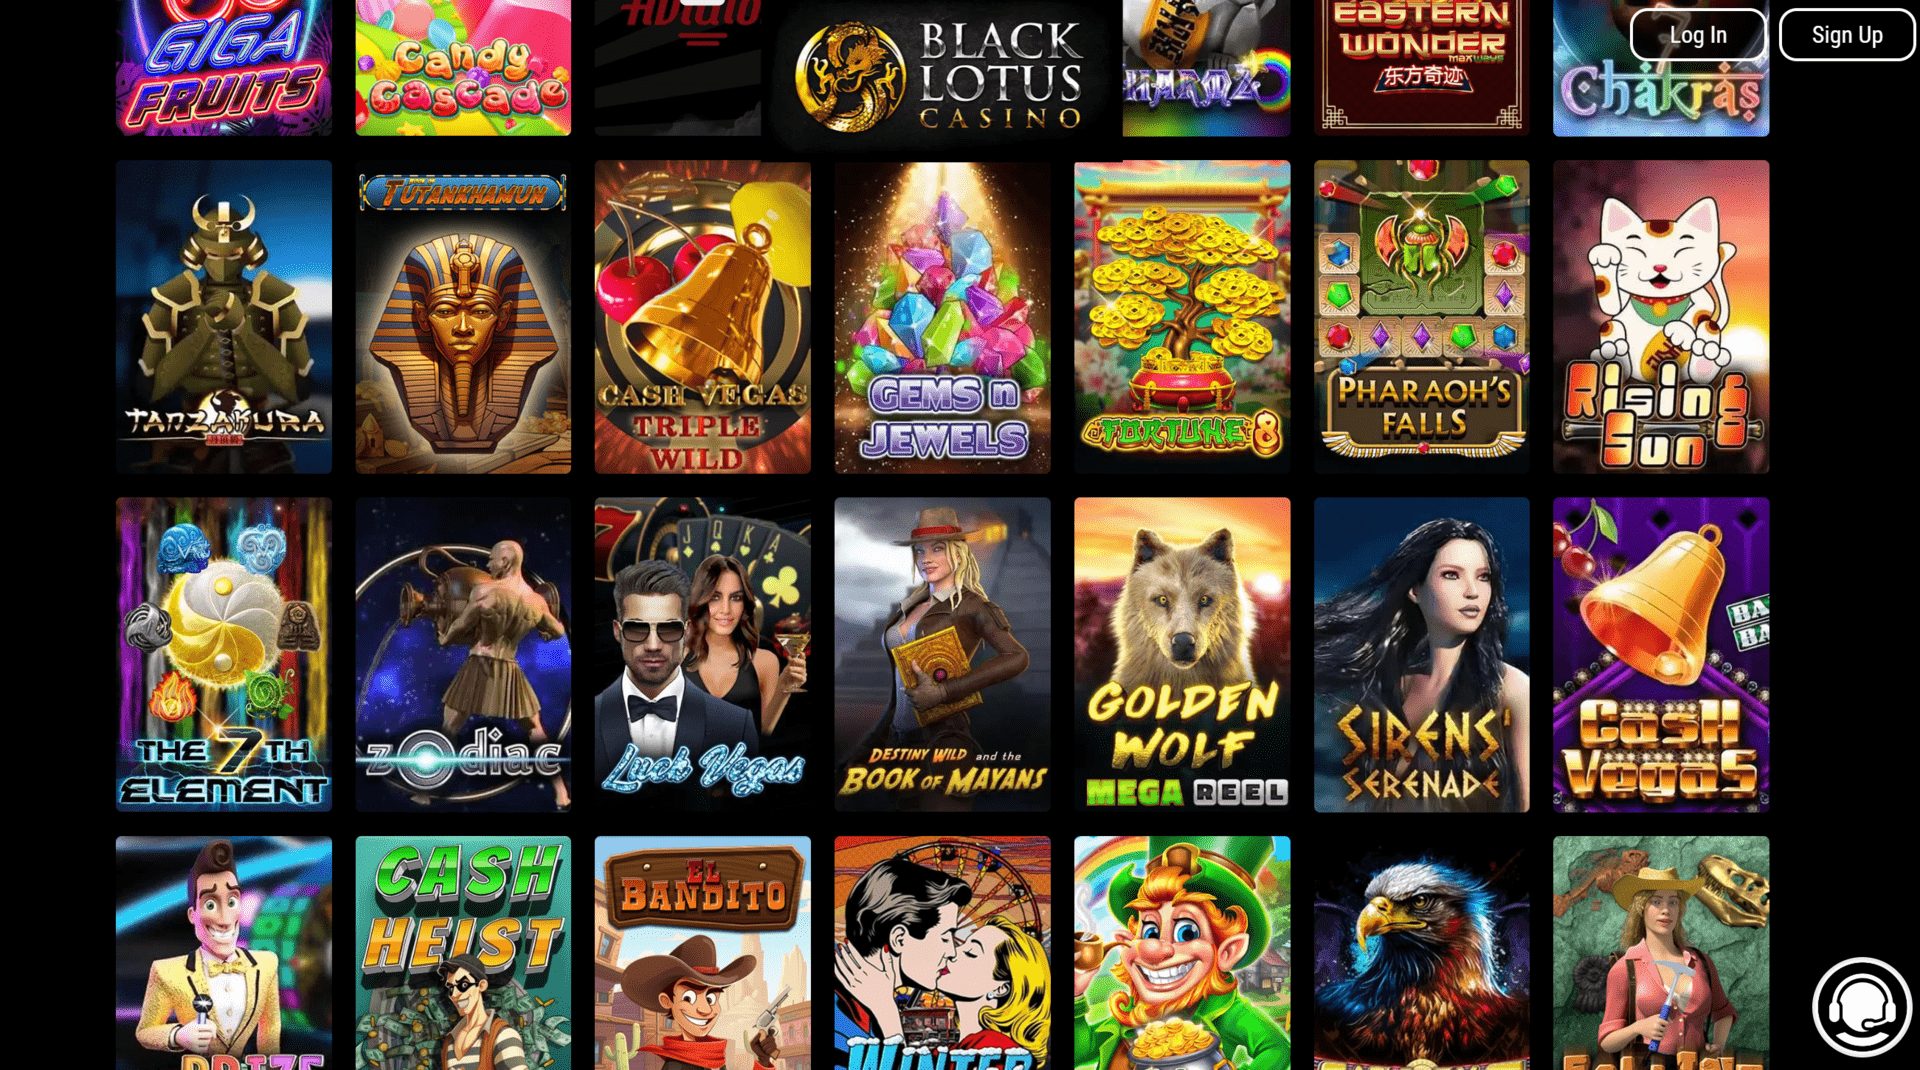 Black Lotus Casino online slots for real money